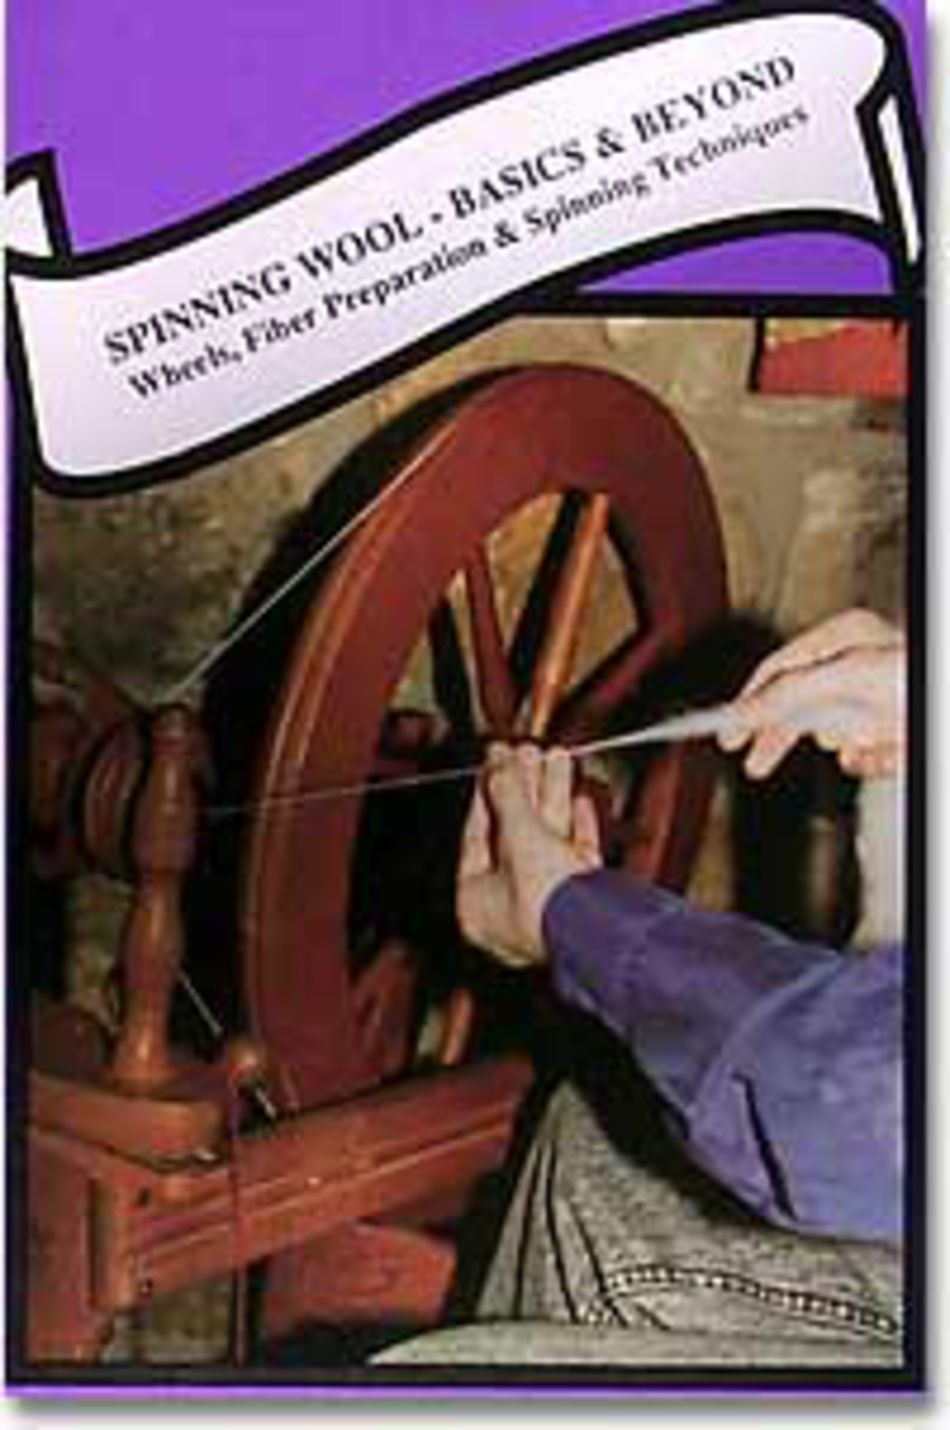 Spinning CDDVD DVD SPINNING WOOL BASICS and BEYOND